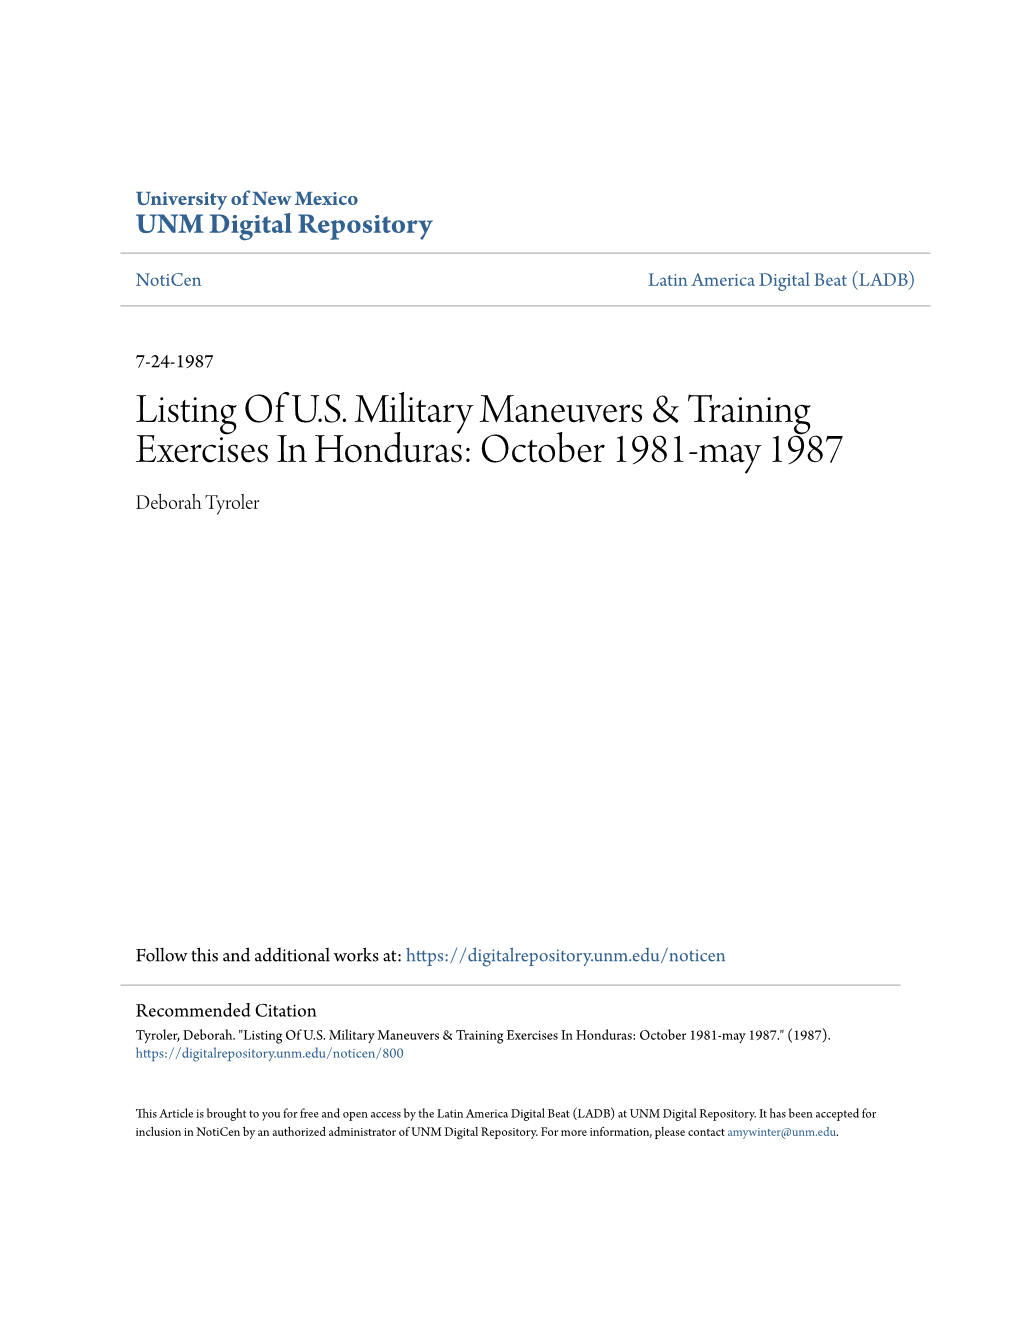 Listing of US Military Maneuvers & Training